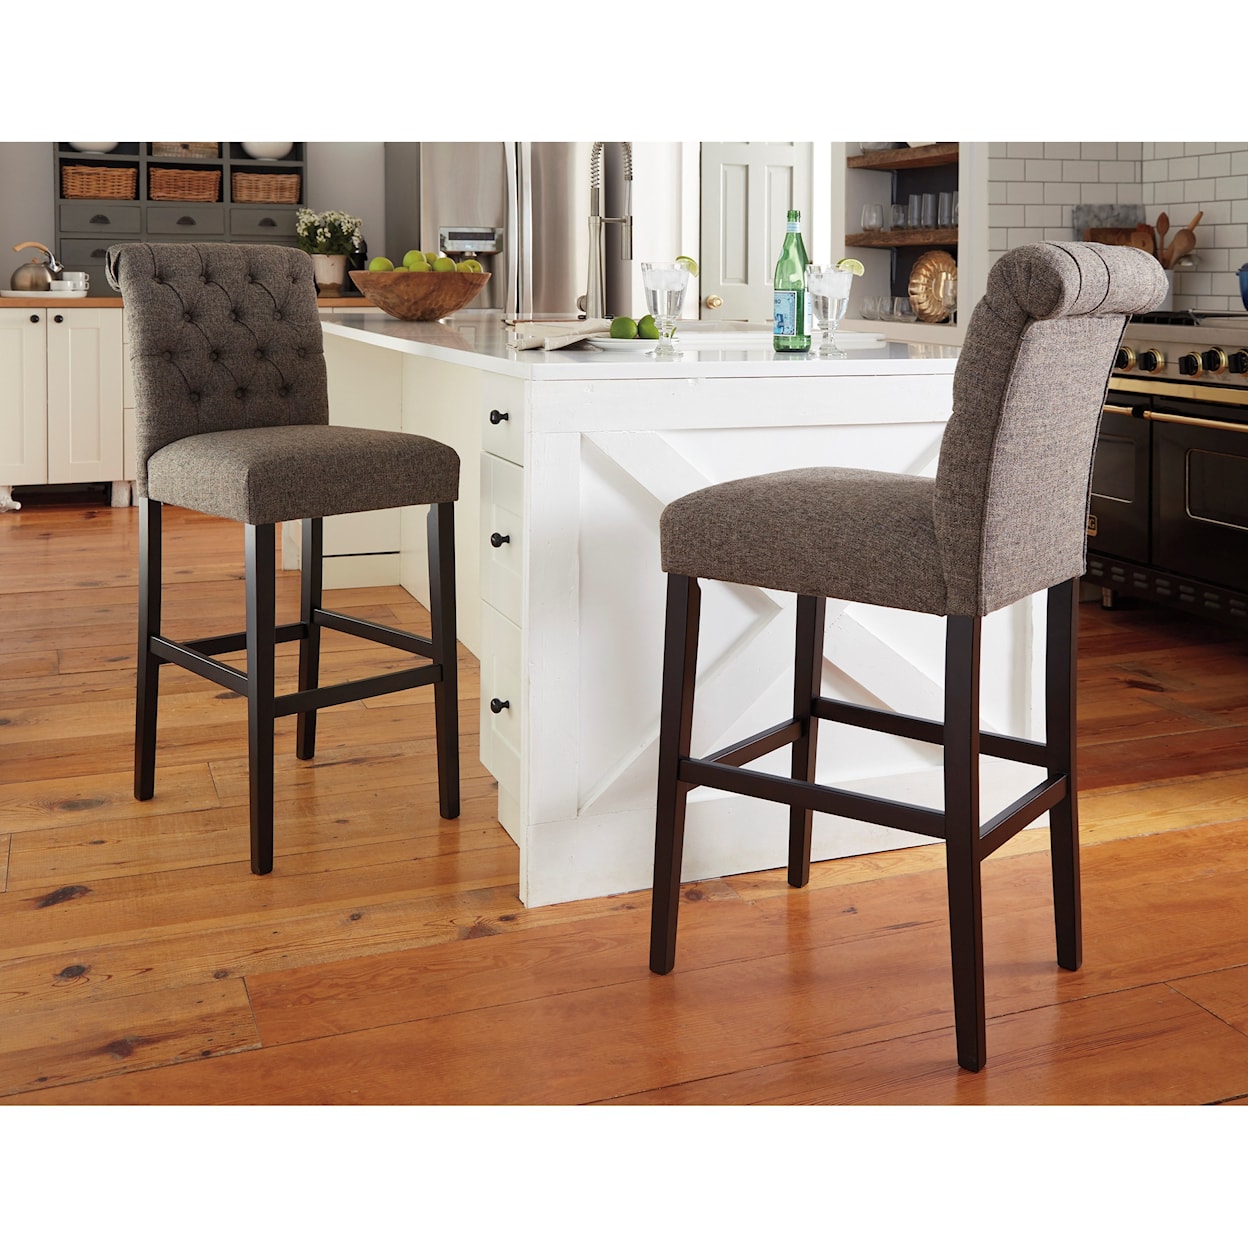 Ashley Furniture Signature Design Tripton Tall Upholstered Barstool